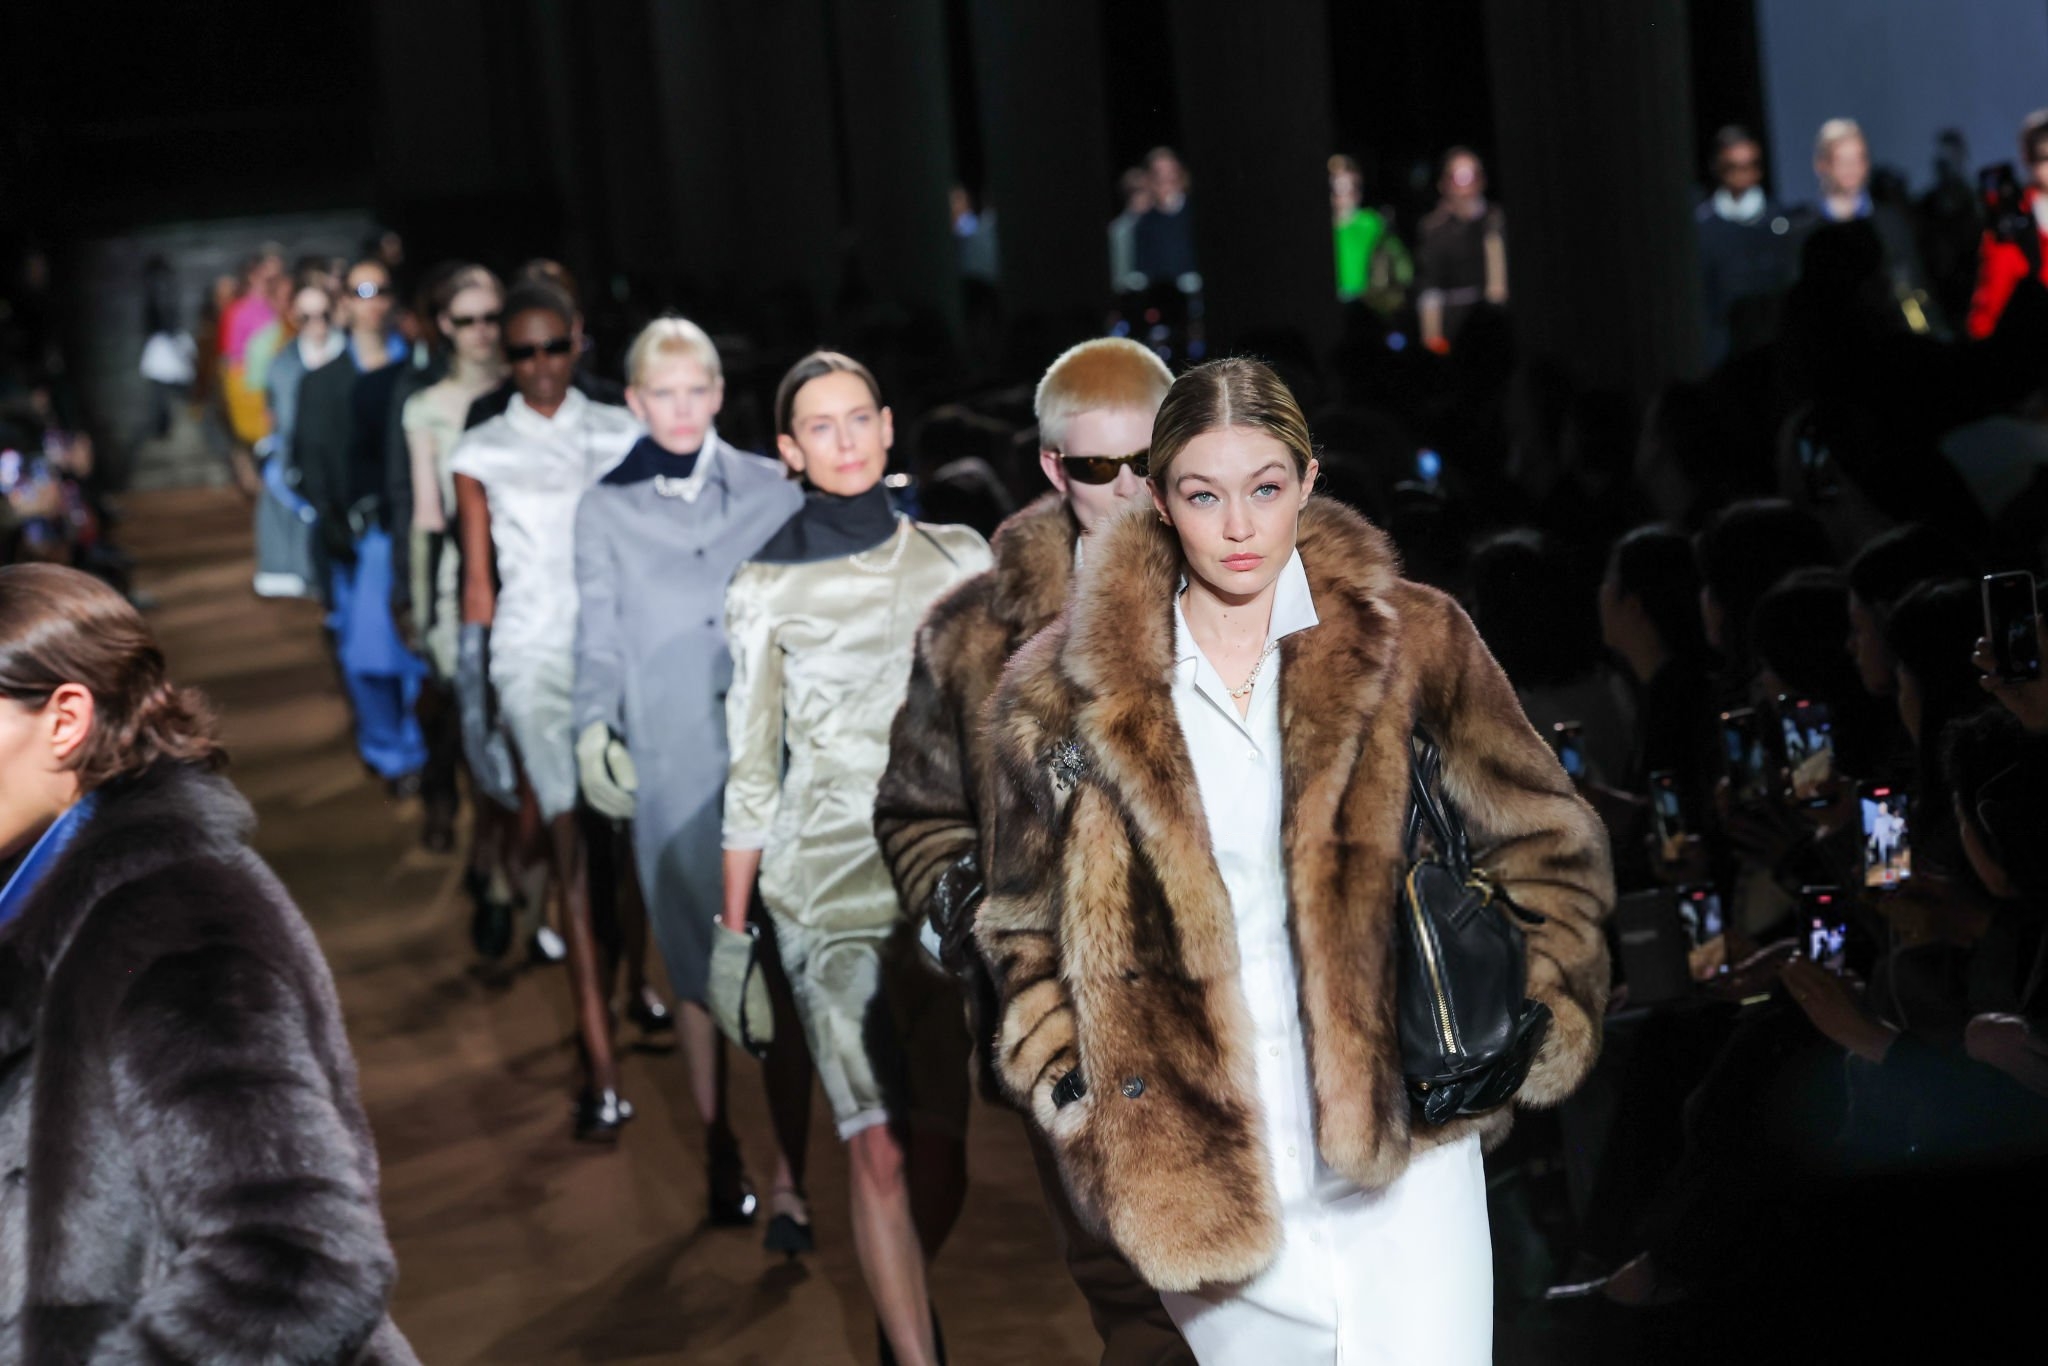 Highlights from Paris Fashion Week: Spotlight on Chanel and Miu Miu